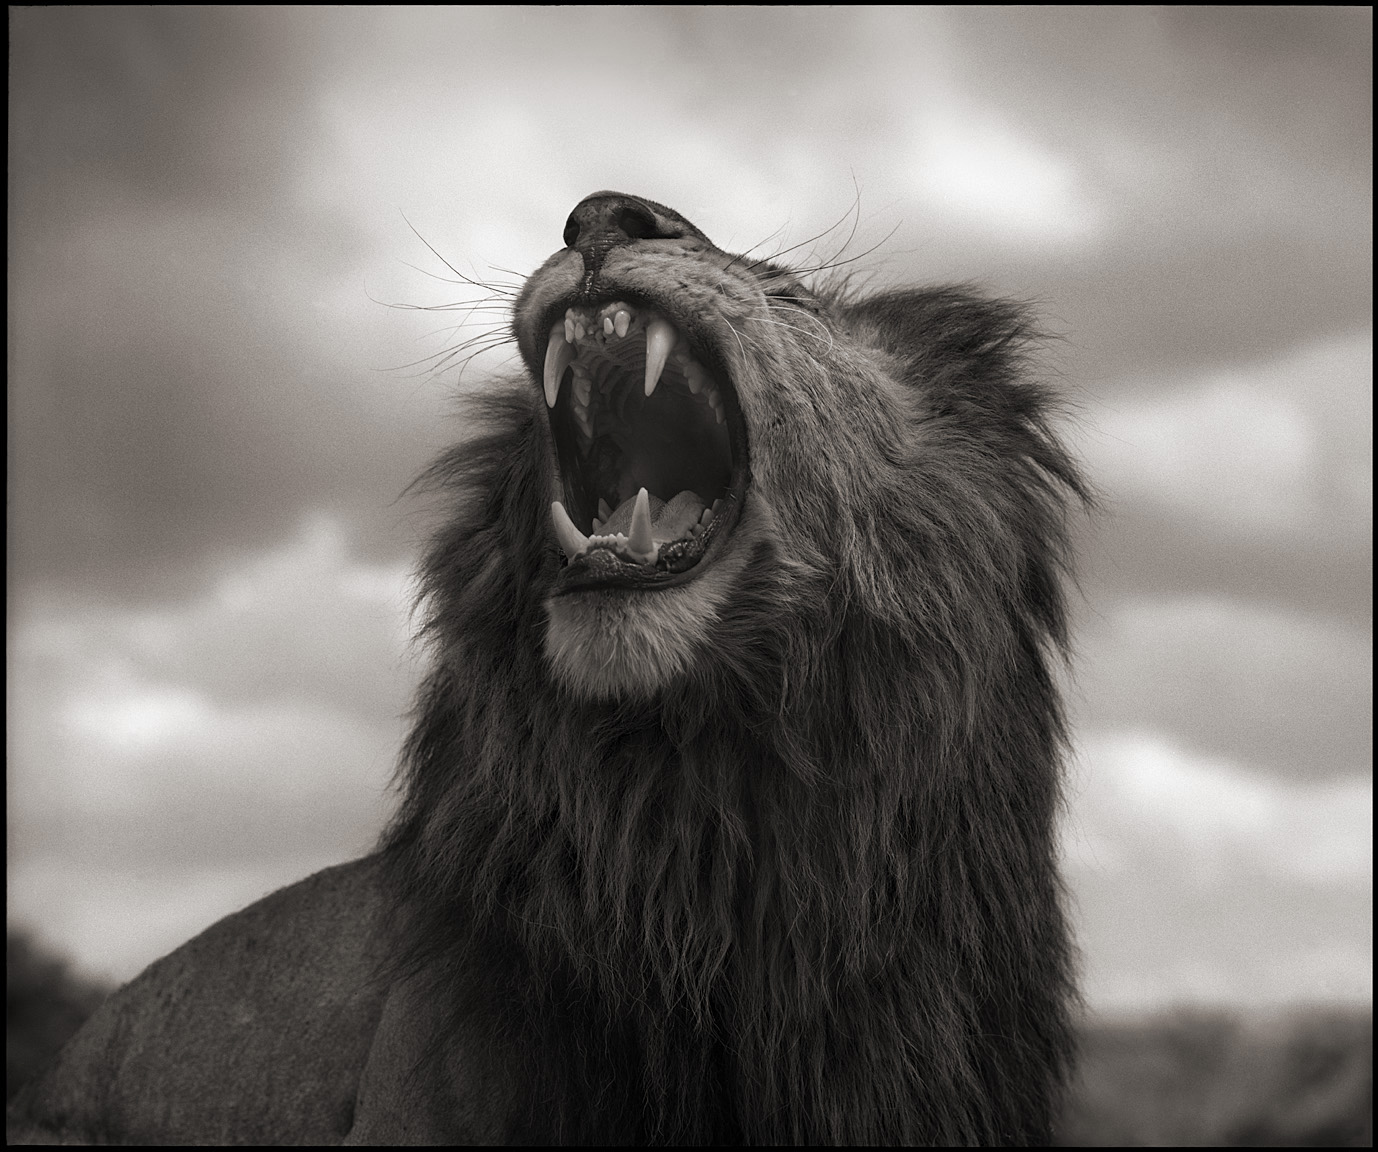  © Nick Brandt, Lion Roar, Maasai Mara, 2012. Courtesy of the Artist and Hasted Kraeutler, NYC. 